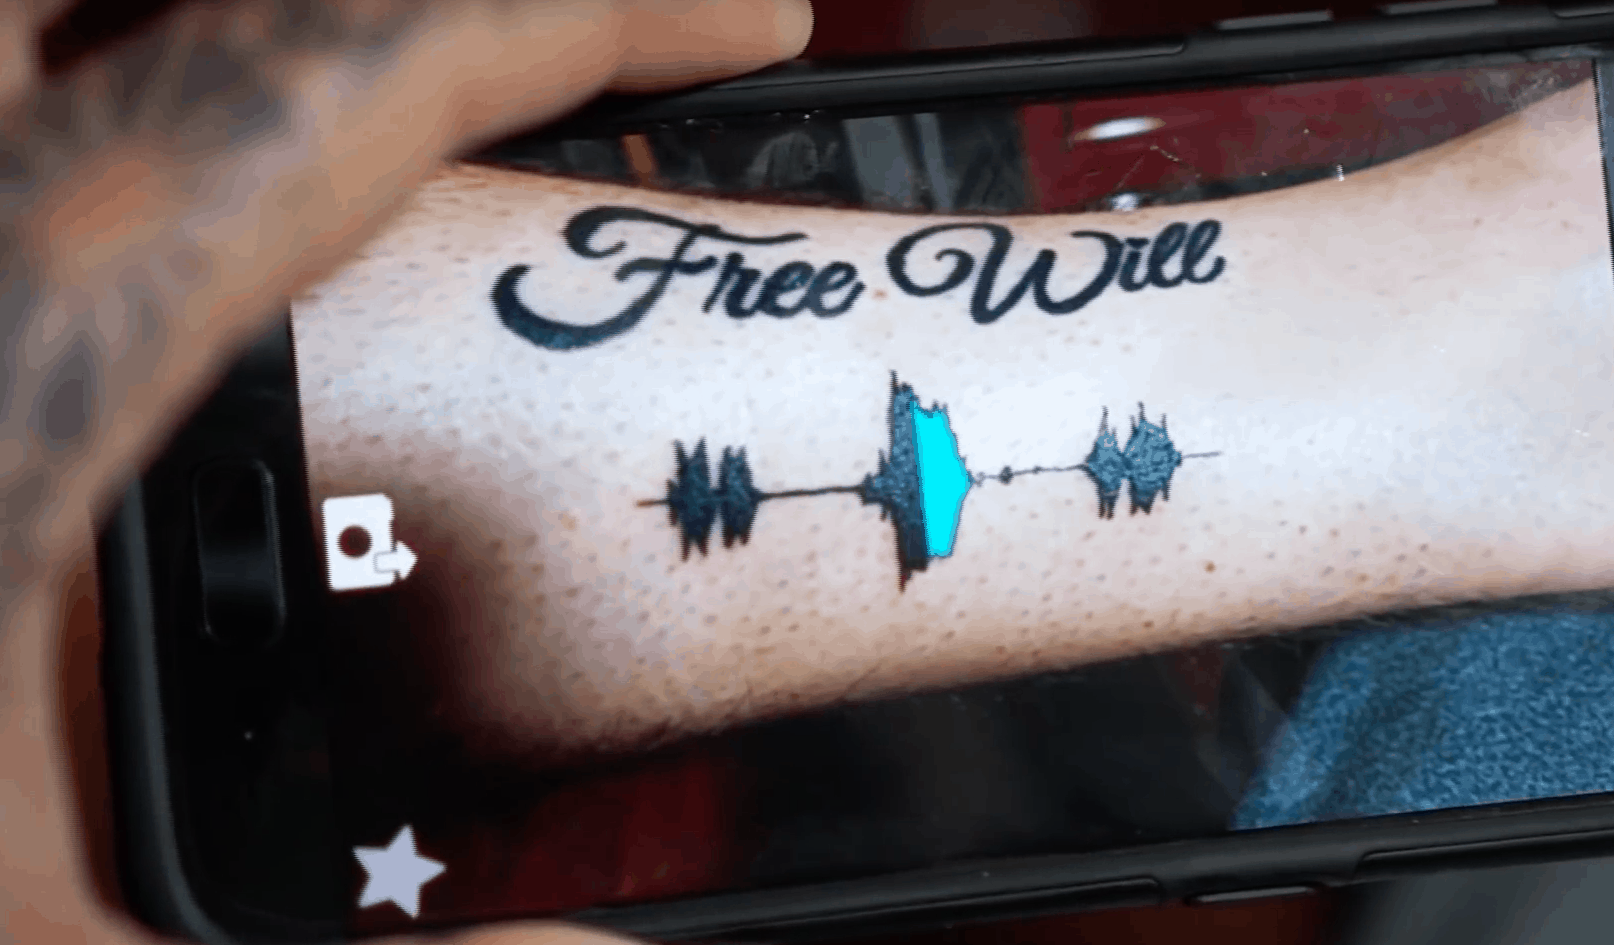 soundwave tattoos app